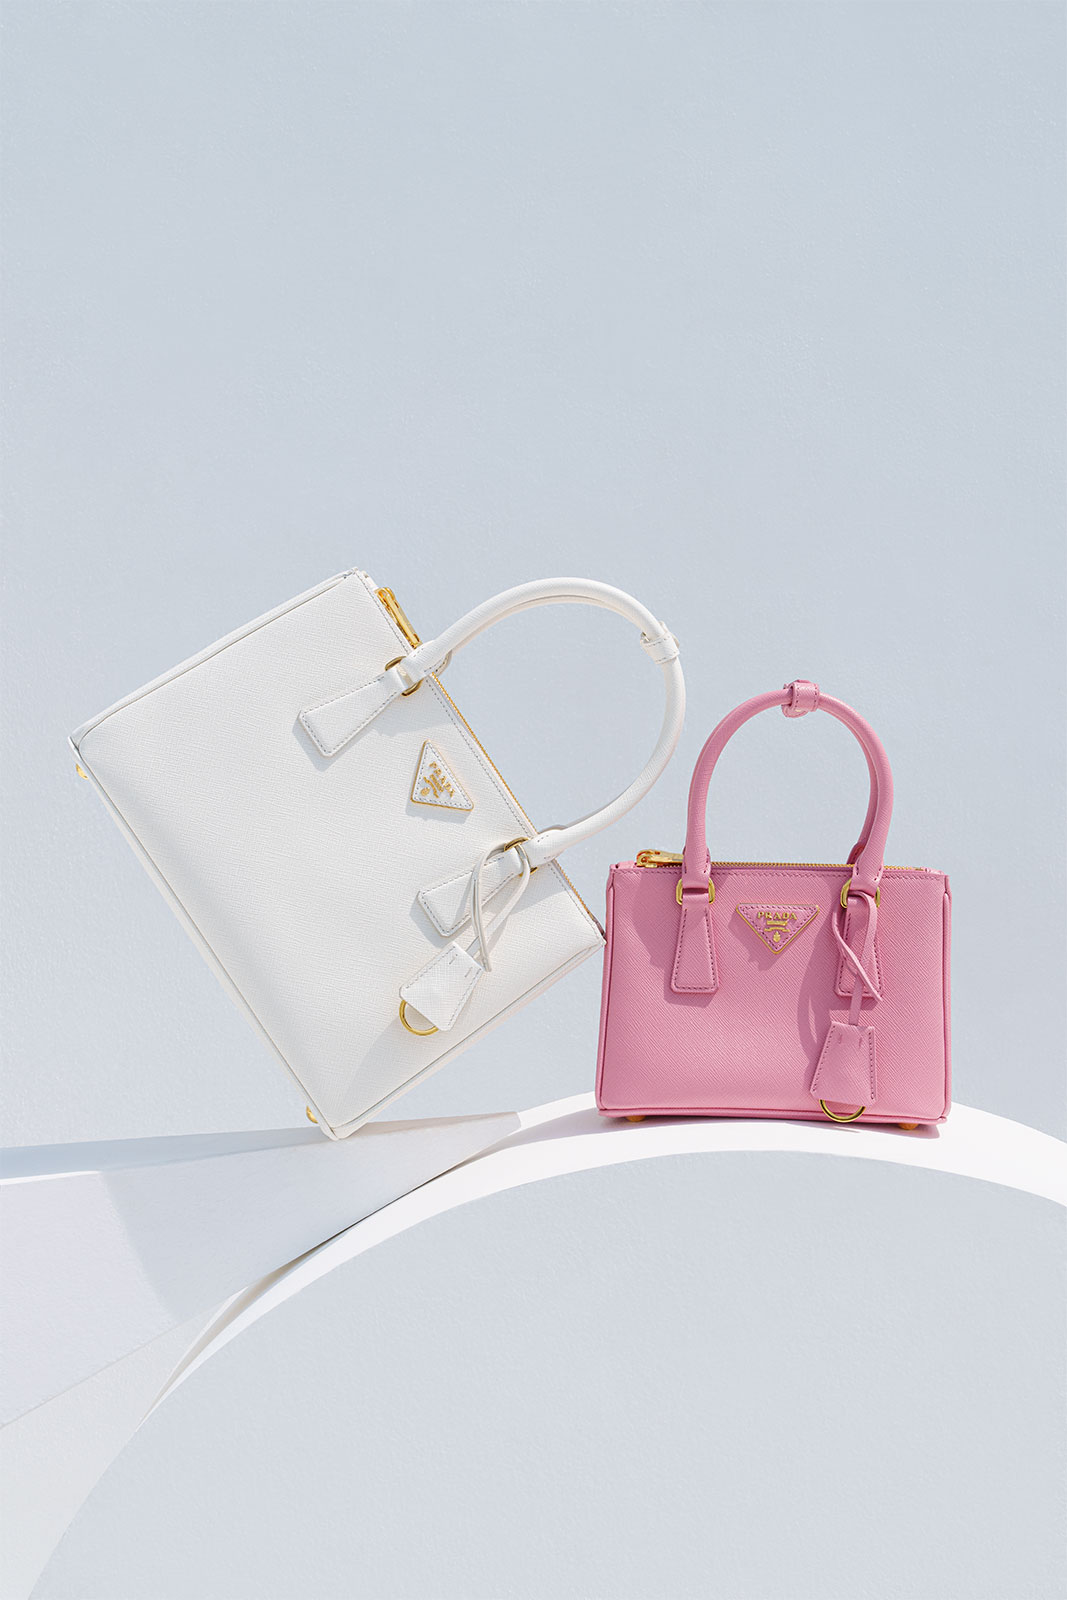 Prada Galleria Bags in Solid Color